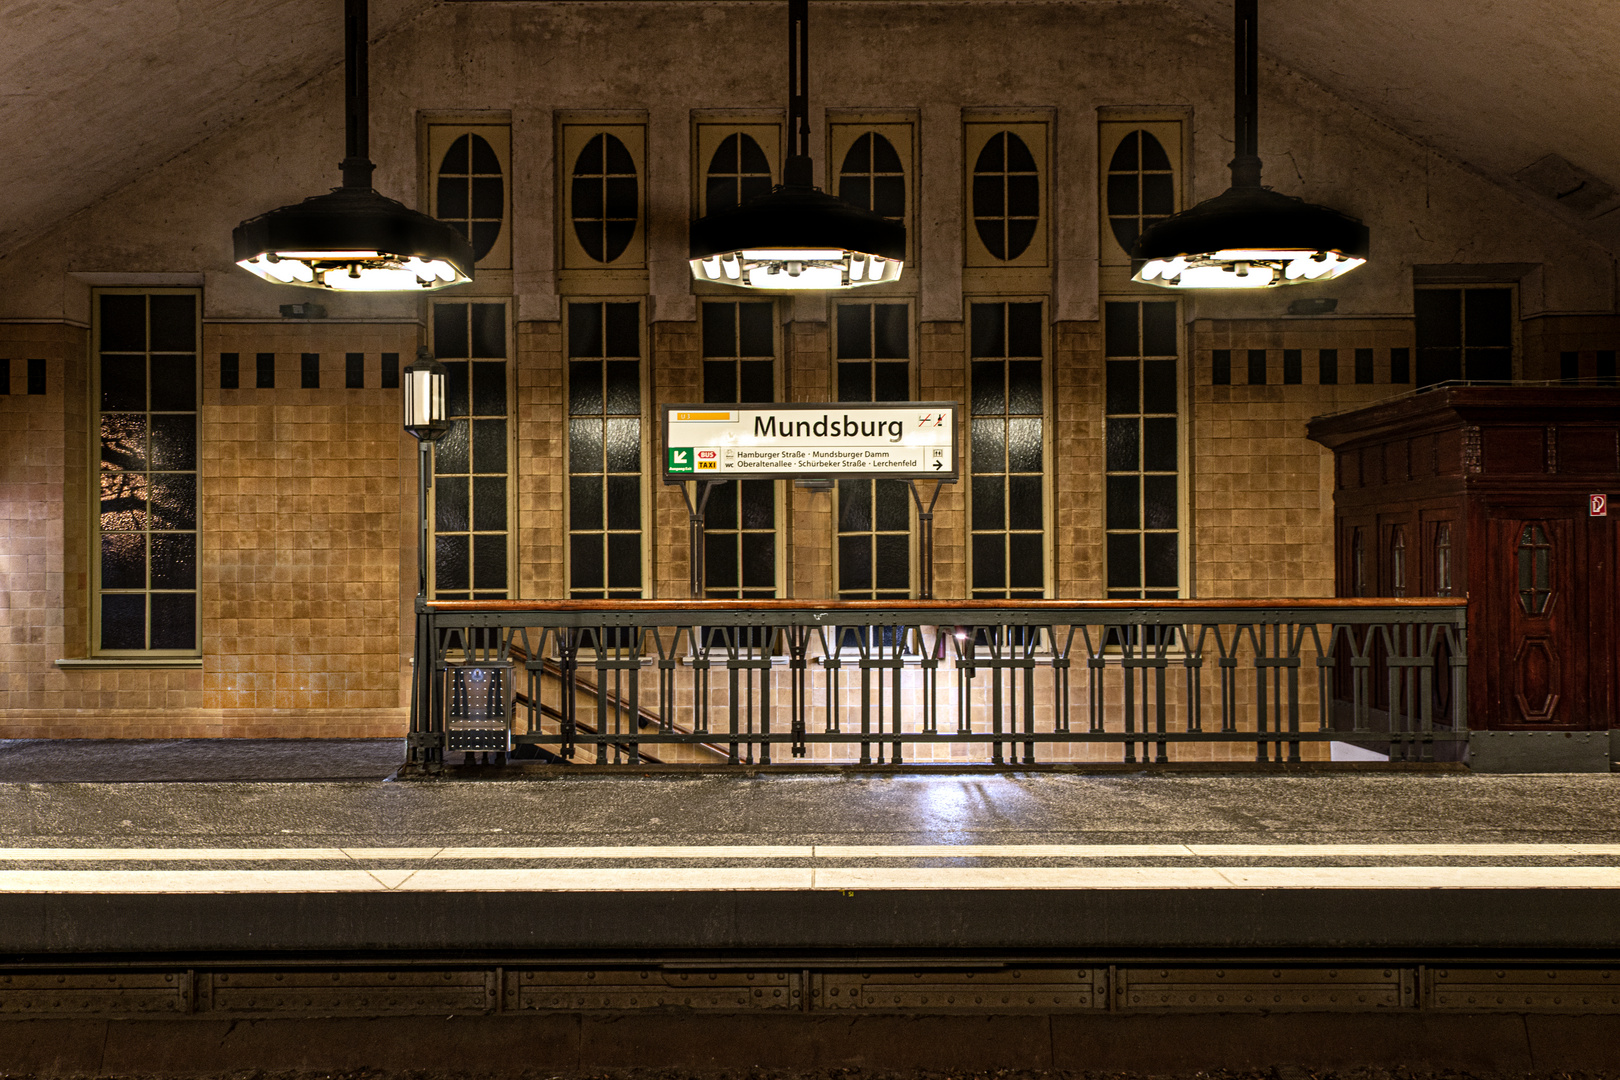 u-Bahn Station Hamburg-Mundsburg